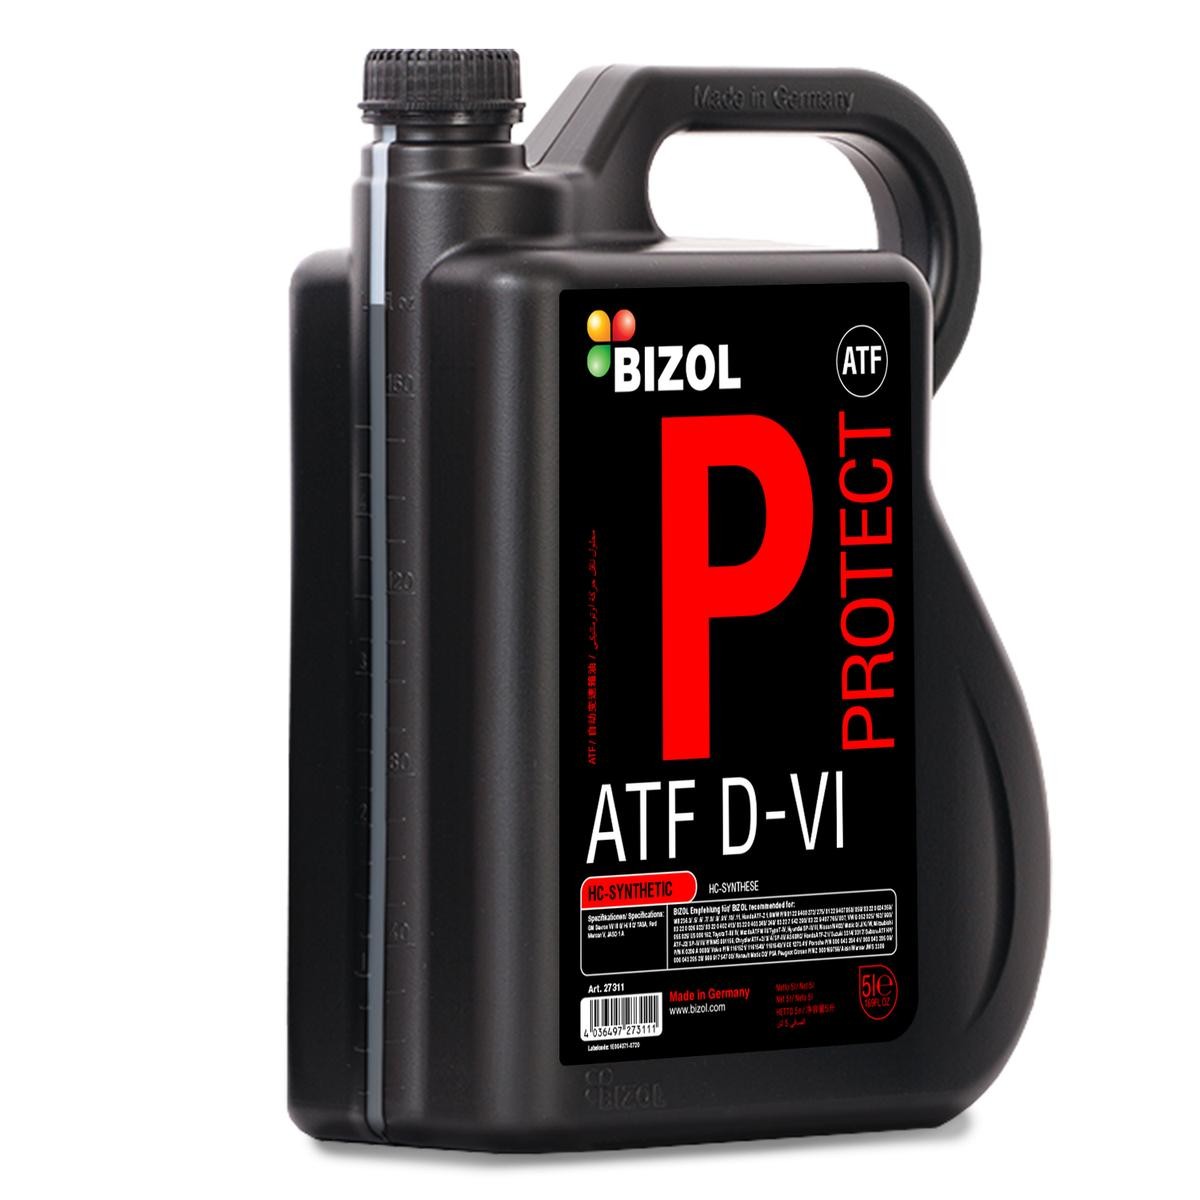 BIZOL Protect ATF D-VI 27311 Automatic transmission fluid 00004320528